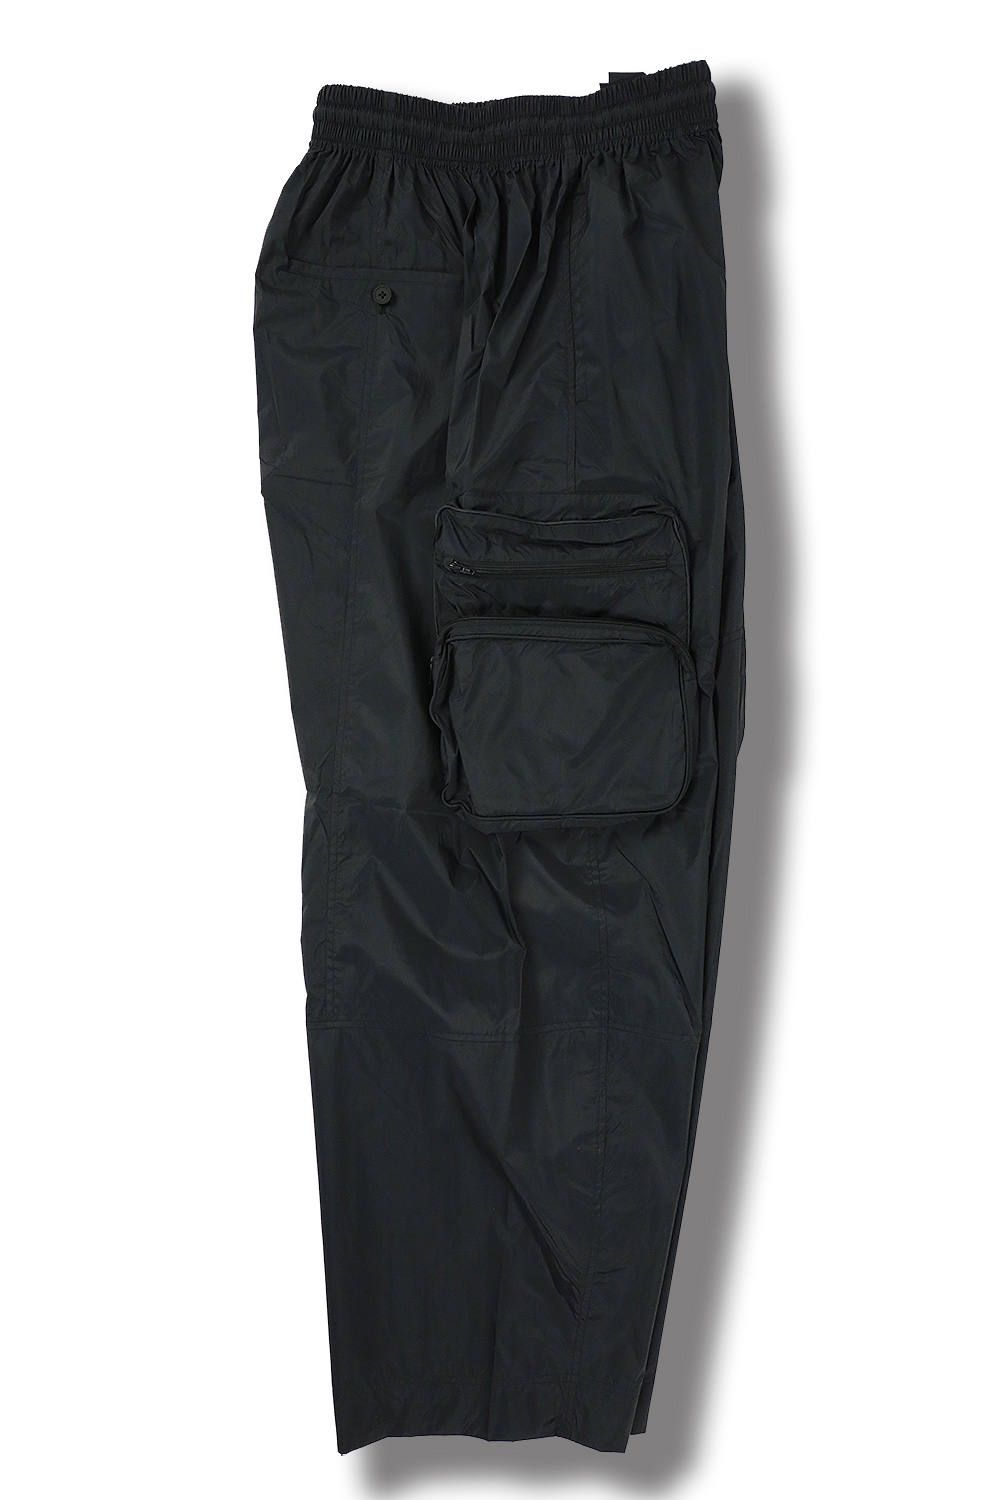 Y-3 - U SHELL TRACK PANTS(BLACK) | Acacia ONLINESTORE